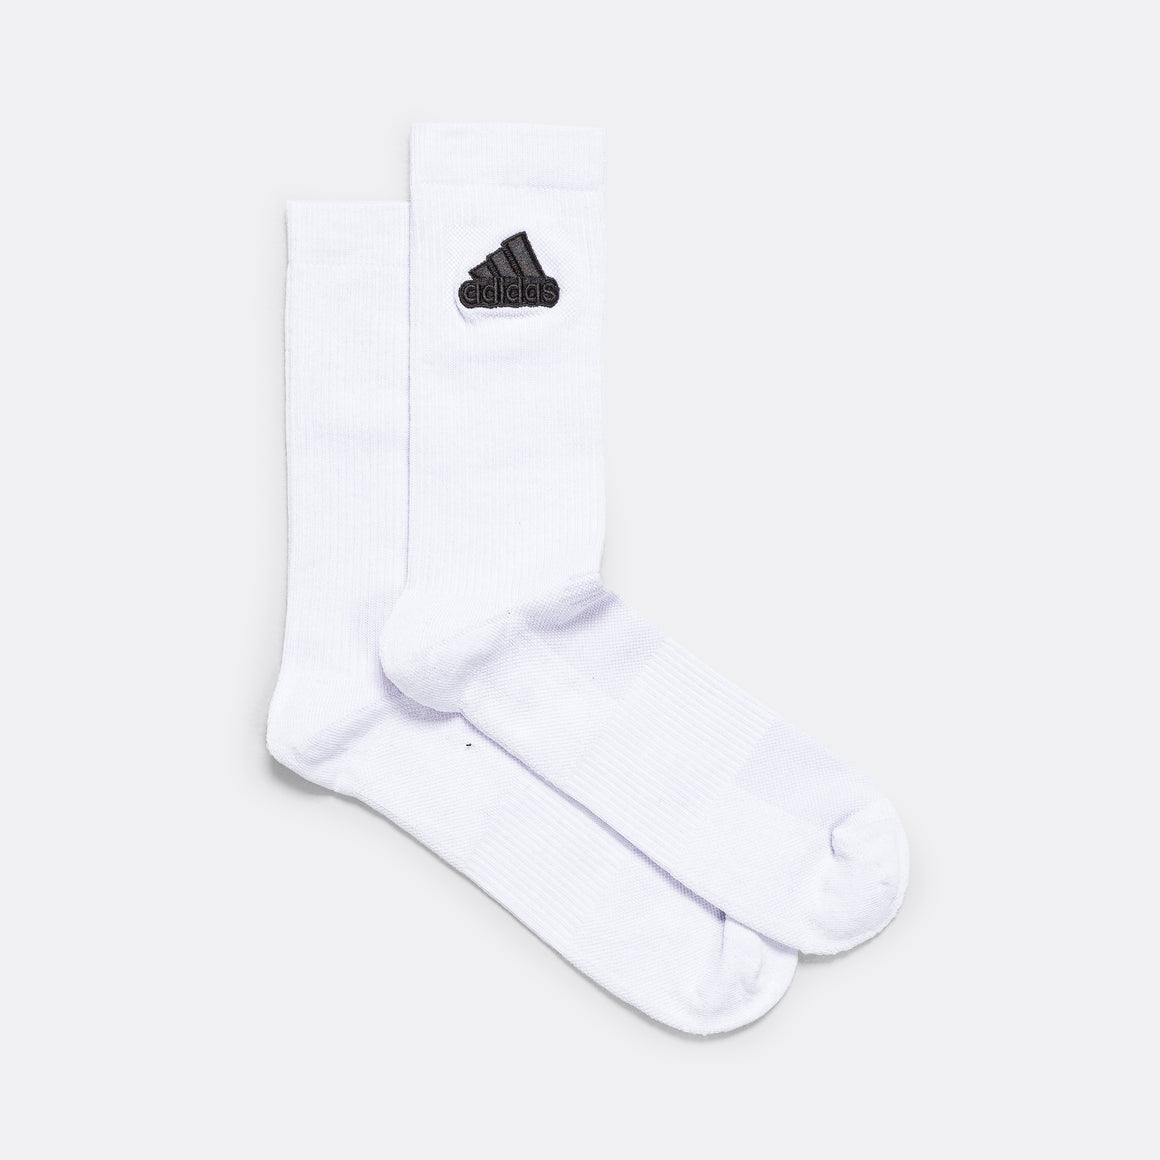 adidas - SW Crew Sock - White/Black - Up There Athletics